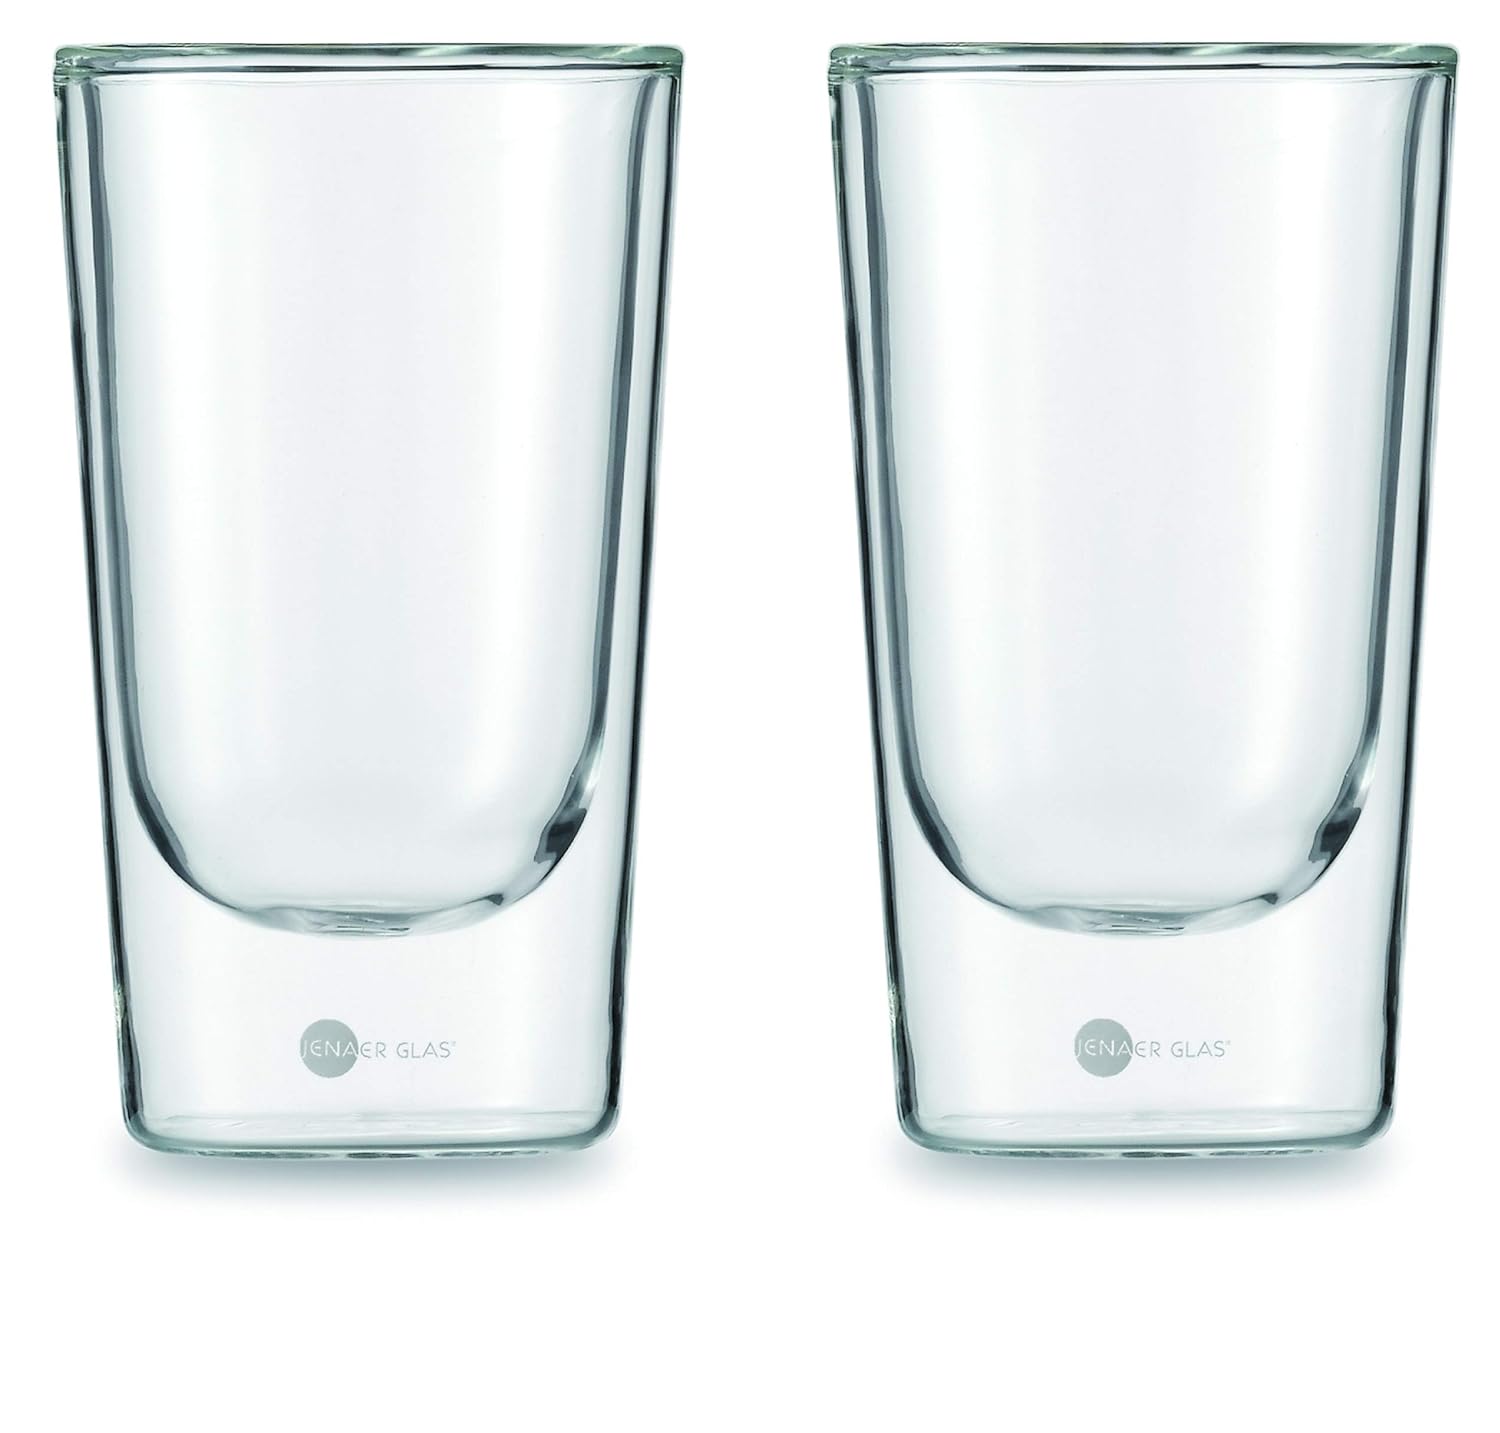 Jenaer Glas mug, 2 units, glass, transparent, 17.2 x 8.6 x 14.7 cm